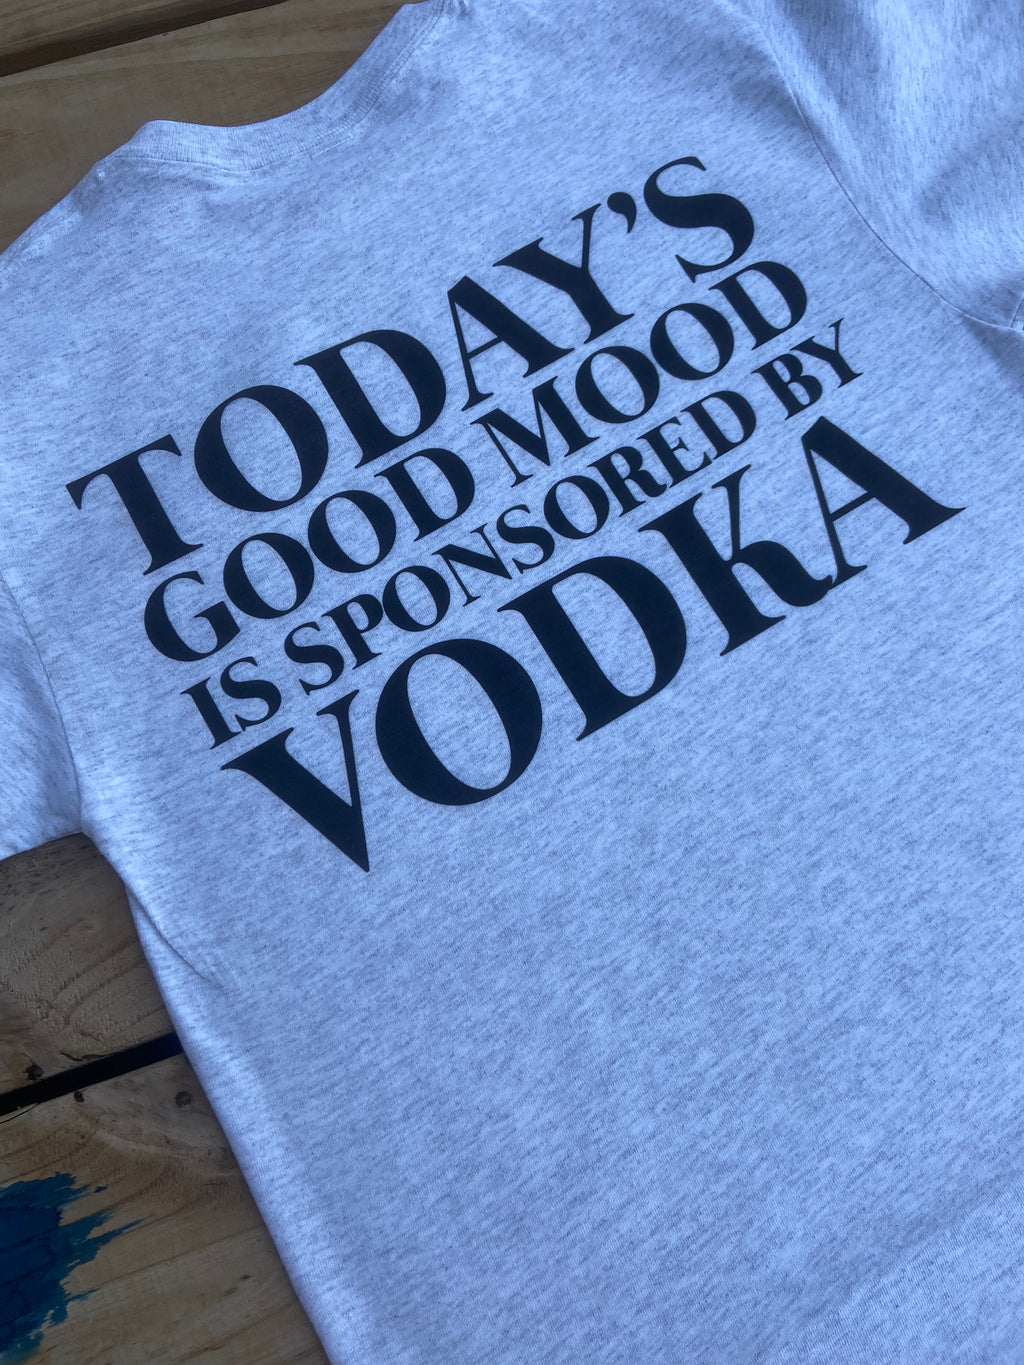 Todays good mood is sponsored by vodka design